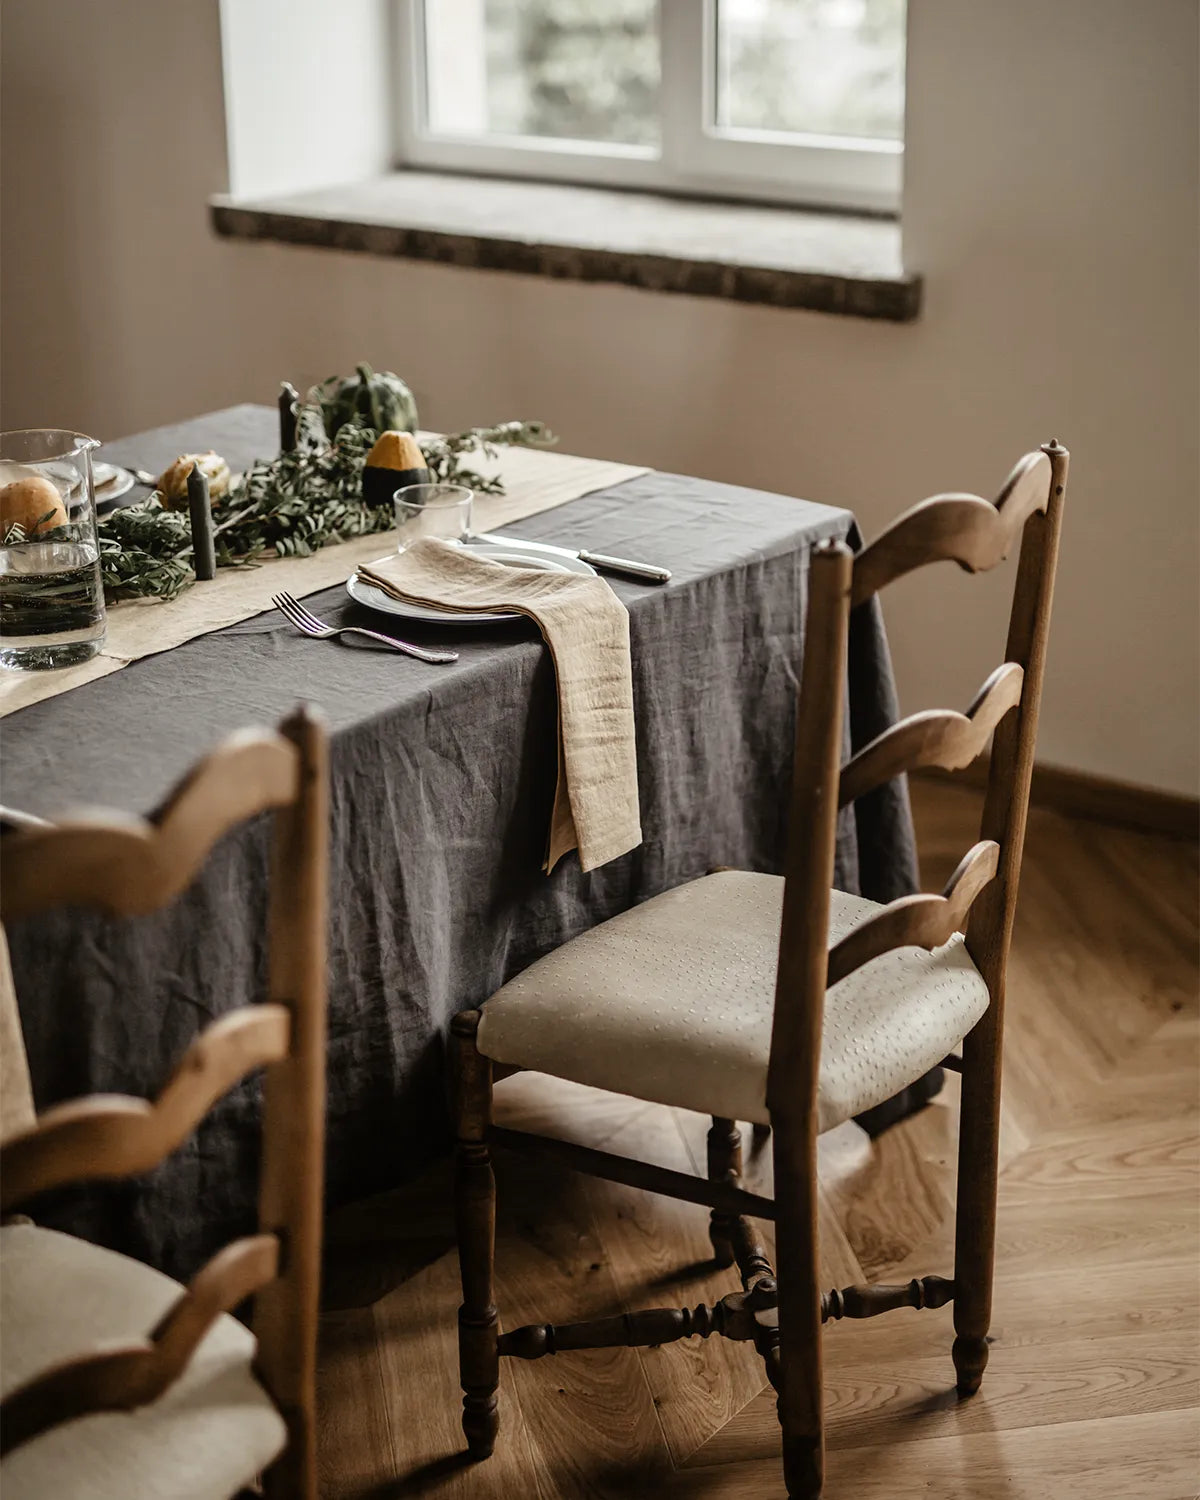 En rektangulär mörkgrå linneduk ligger på ett bord med andra linnetextiler.  